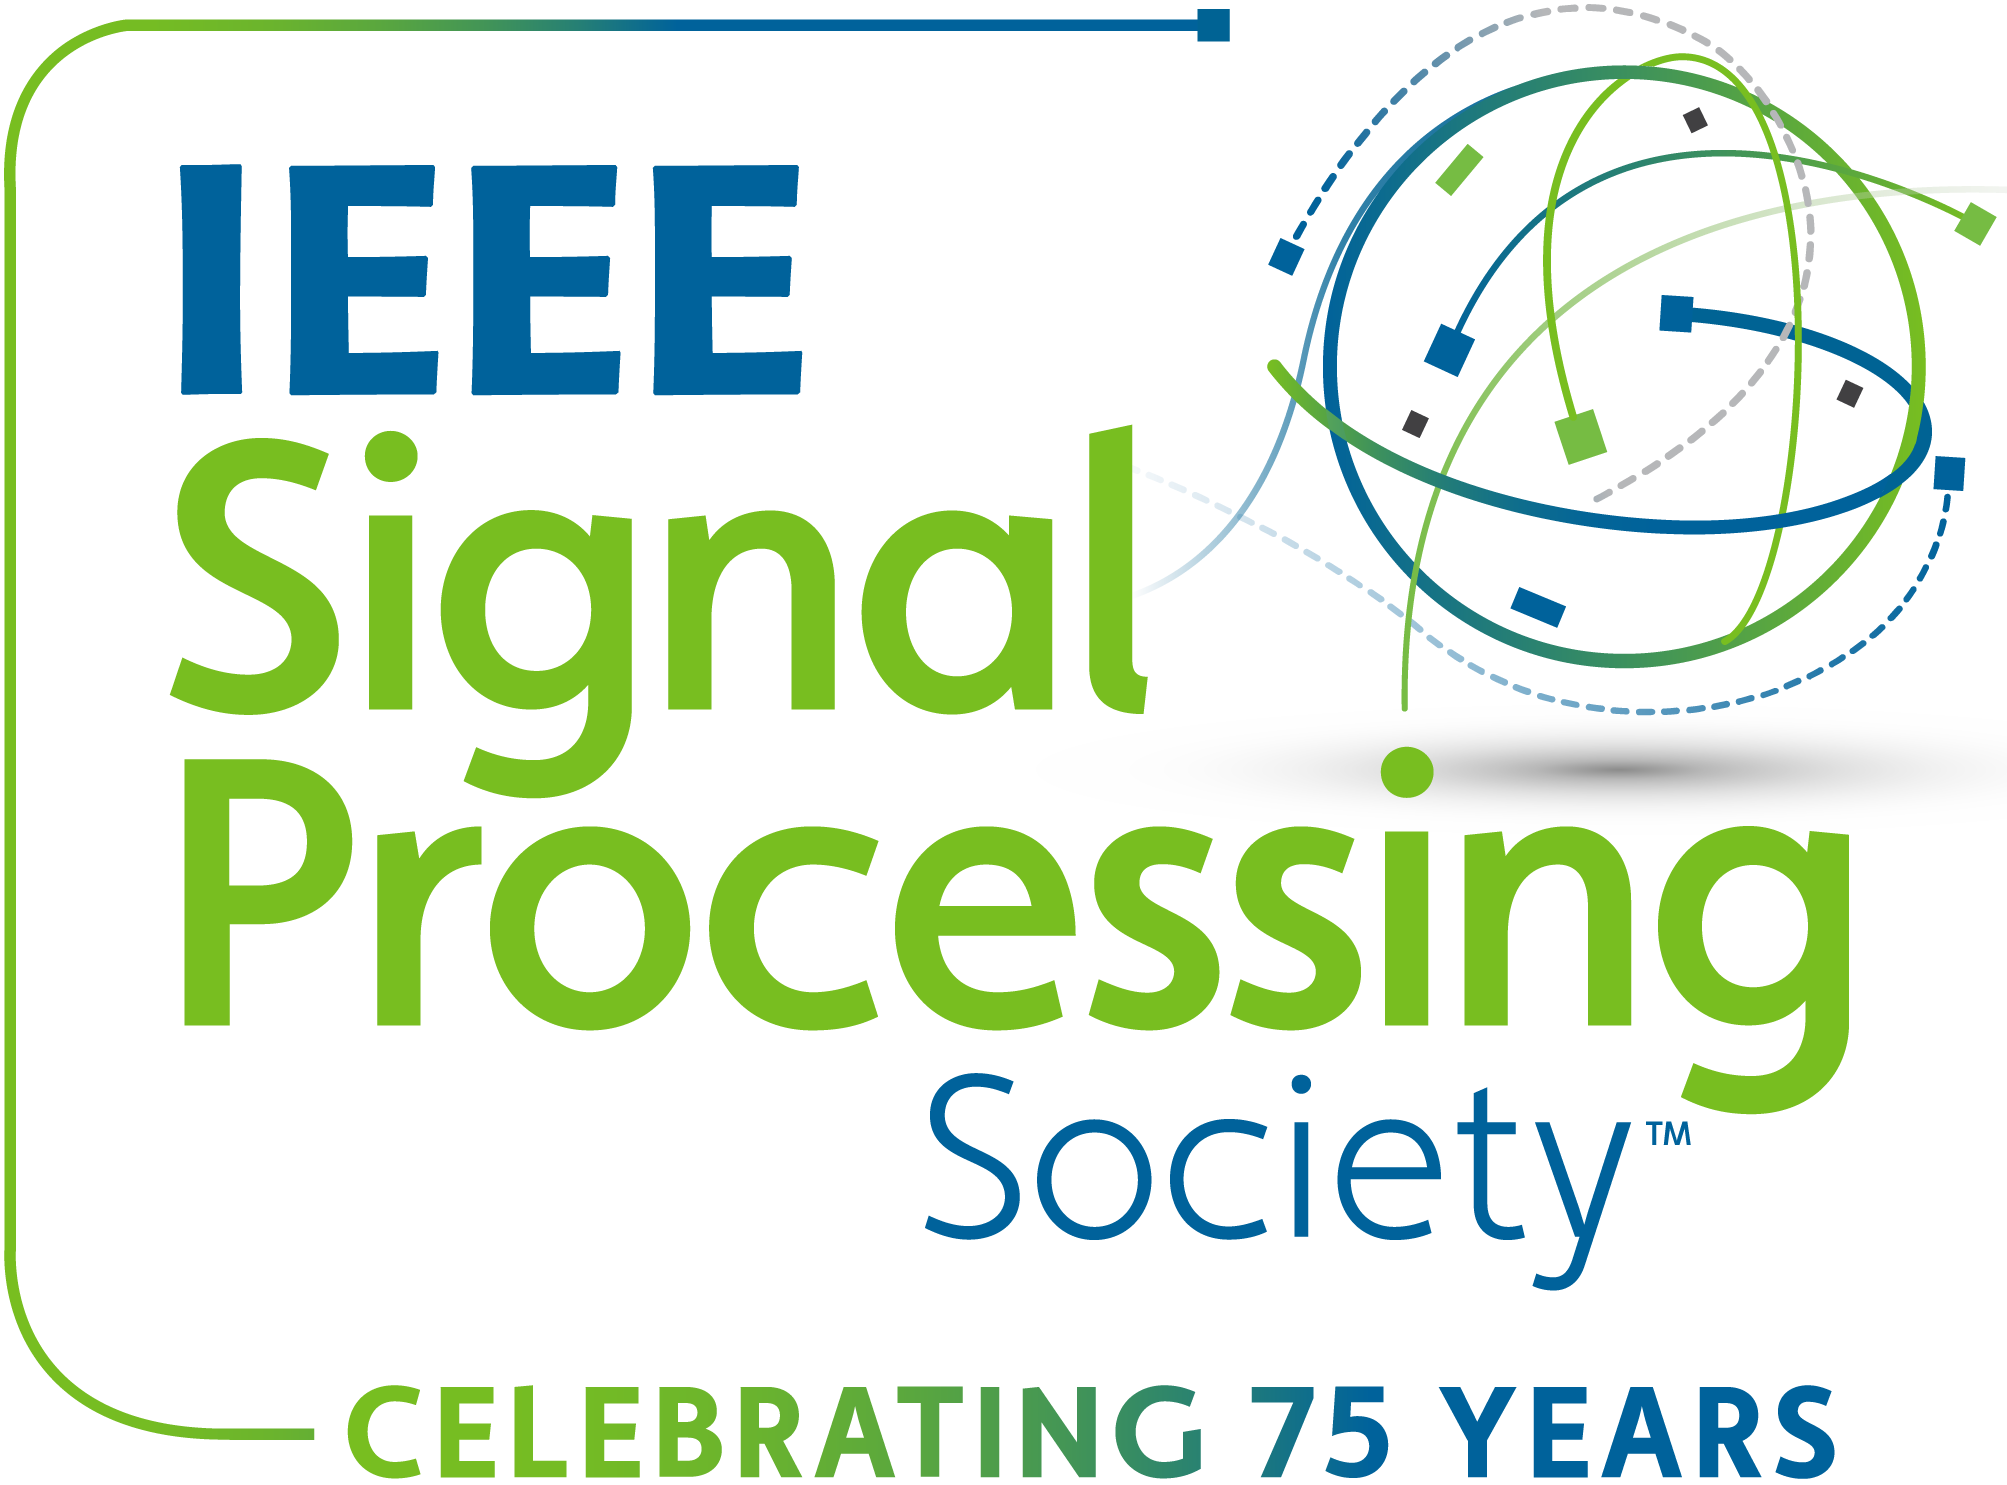 IEEE Signal Processing Society logo